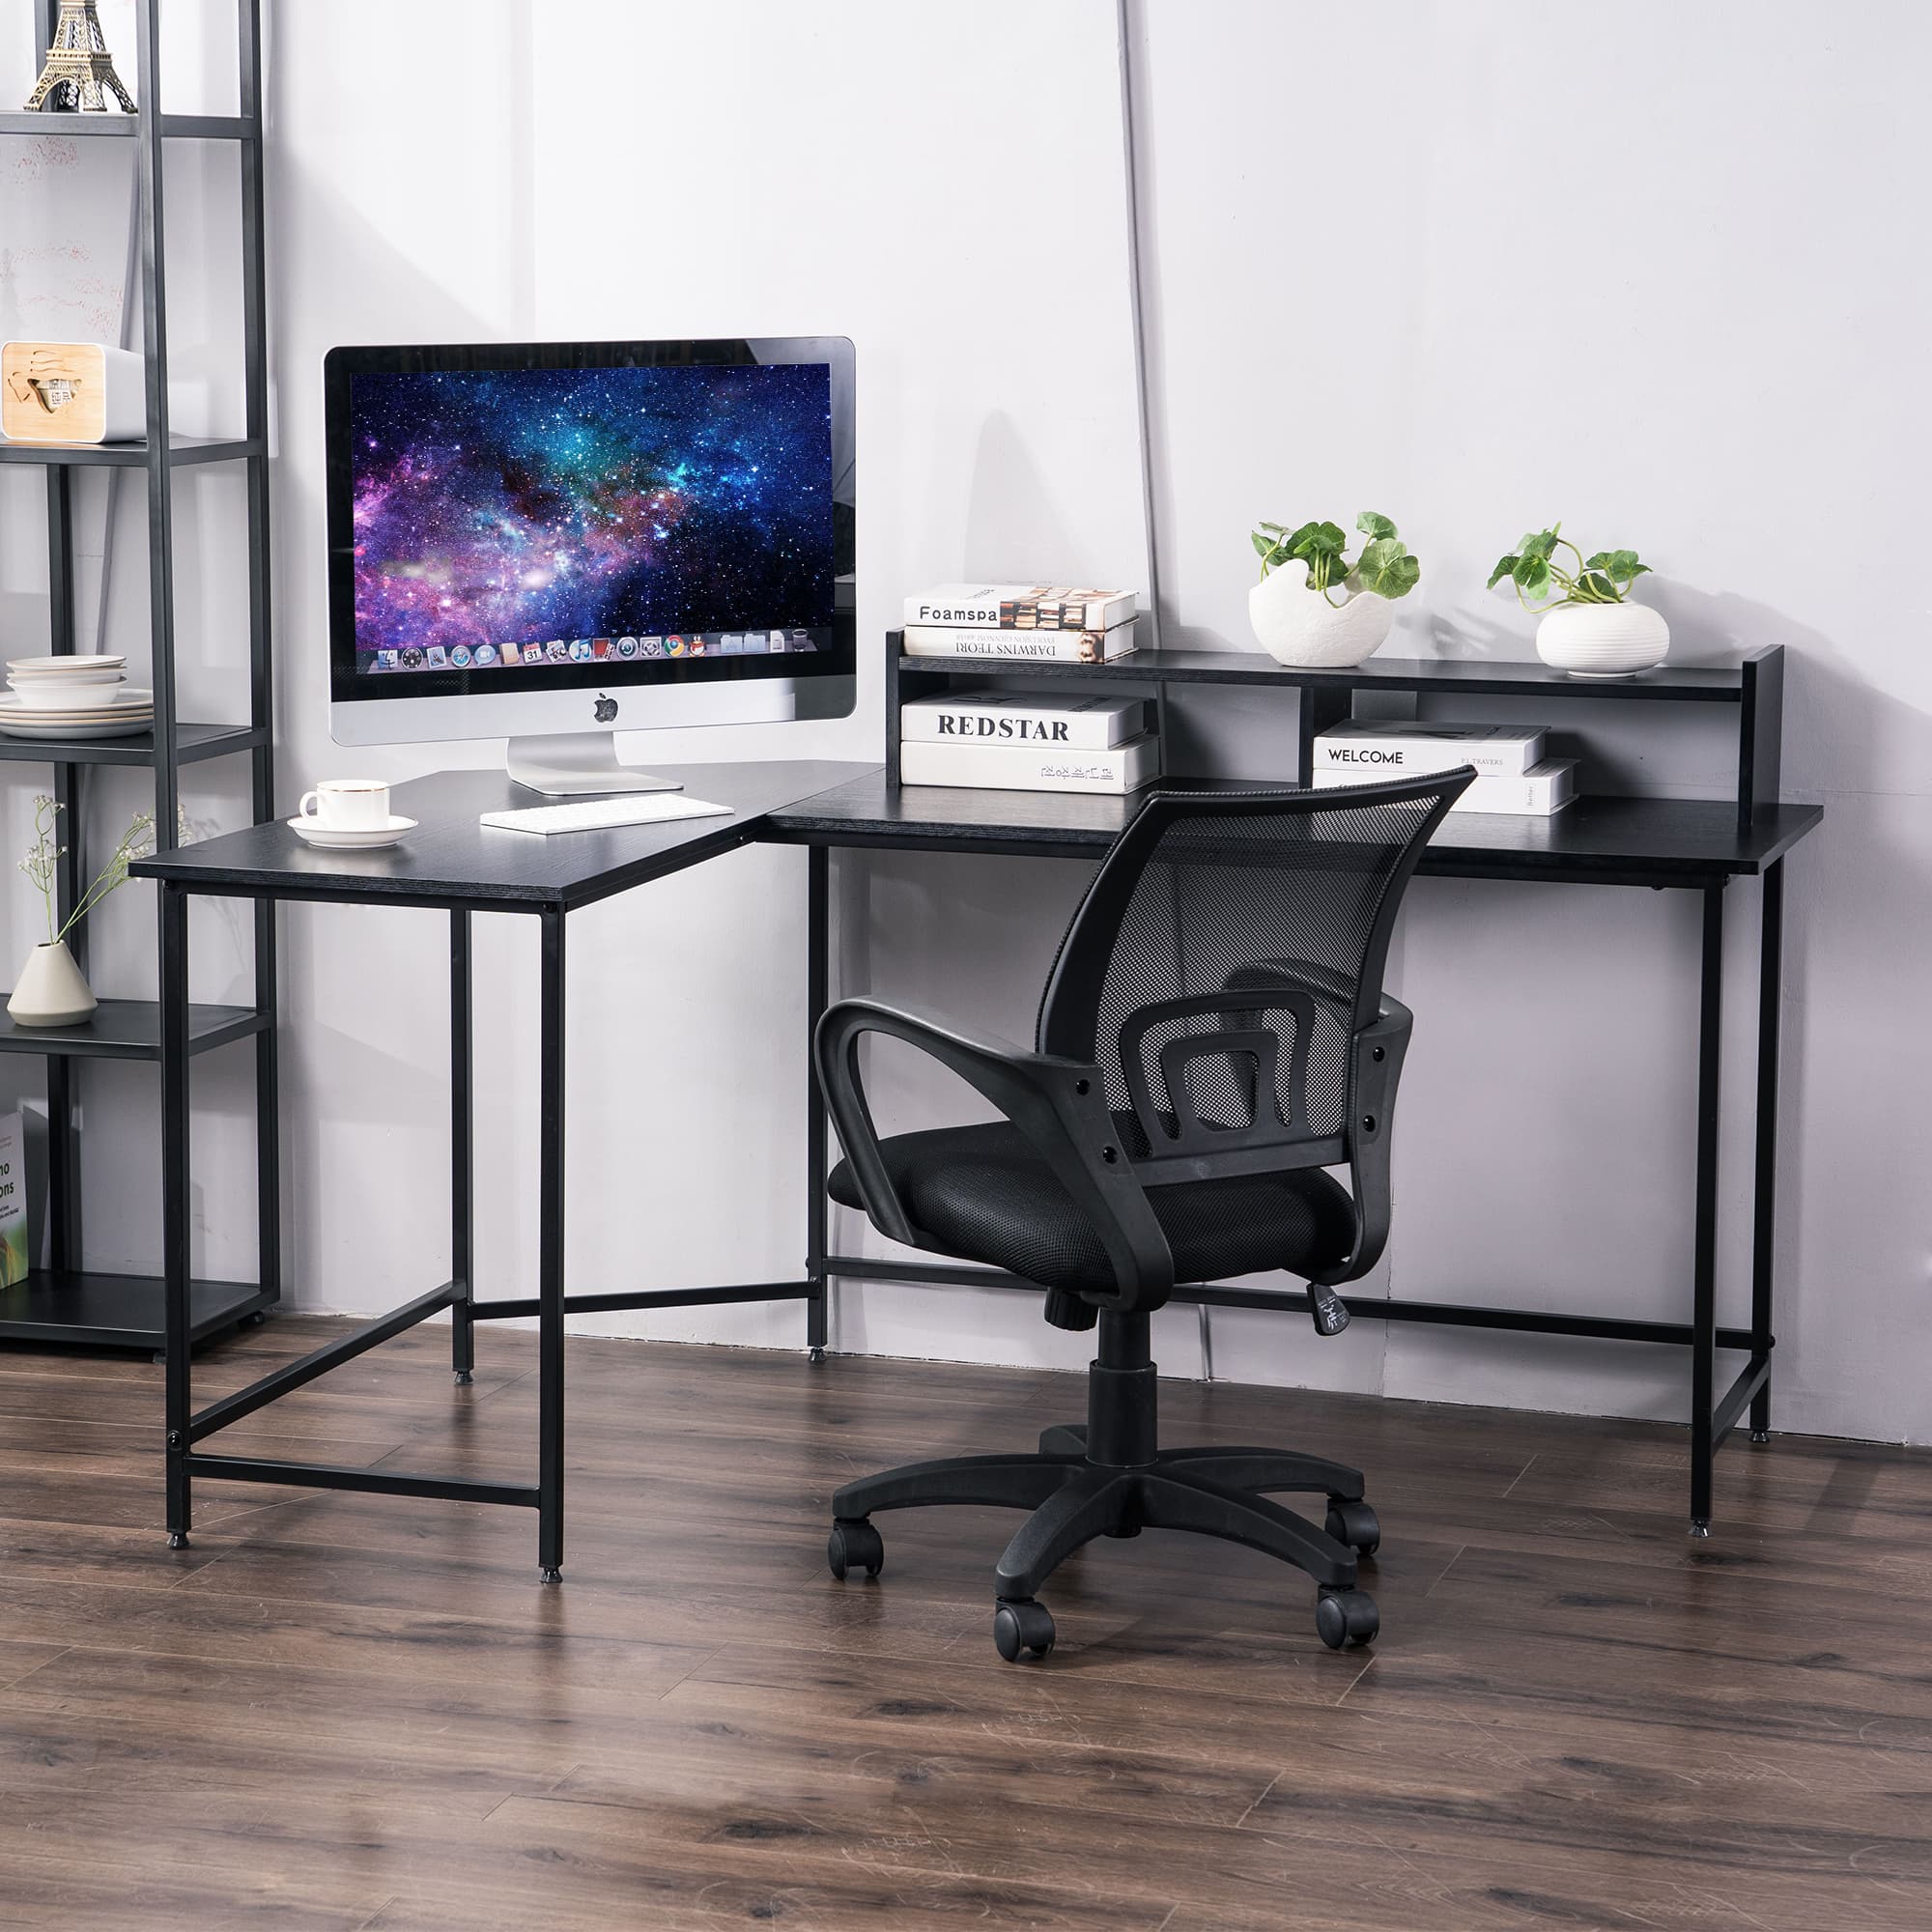 Ivinta Modern L-Shaped Computer Office Desk, Gaming Corner Desk with Monitor Stand